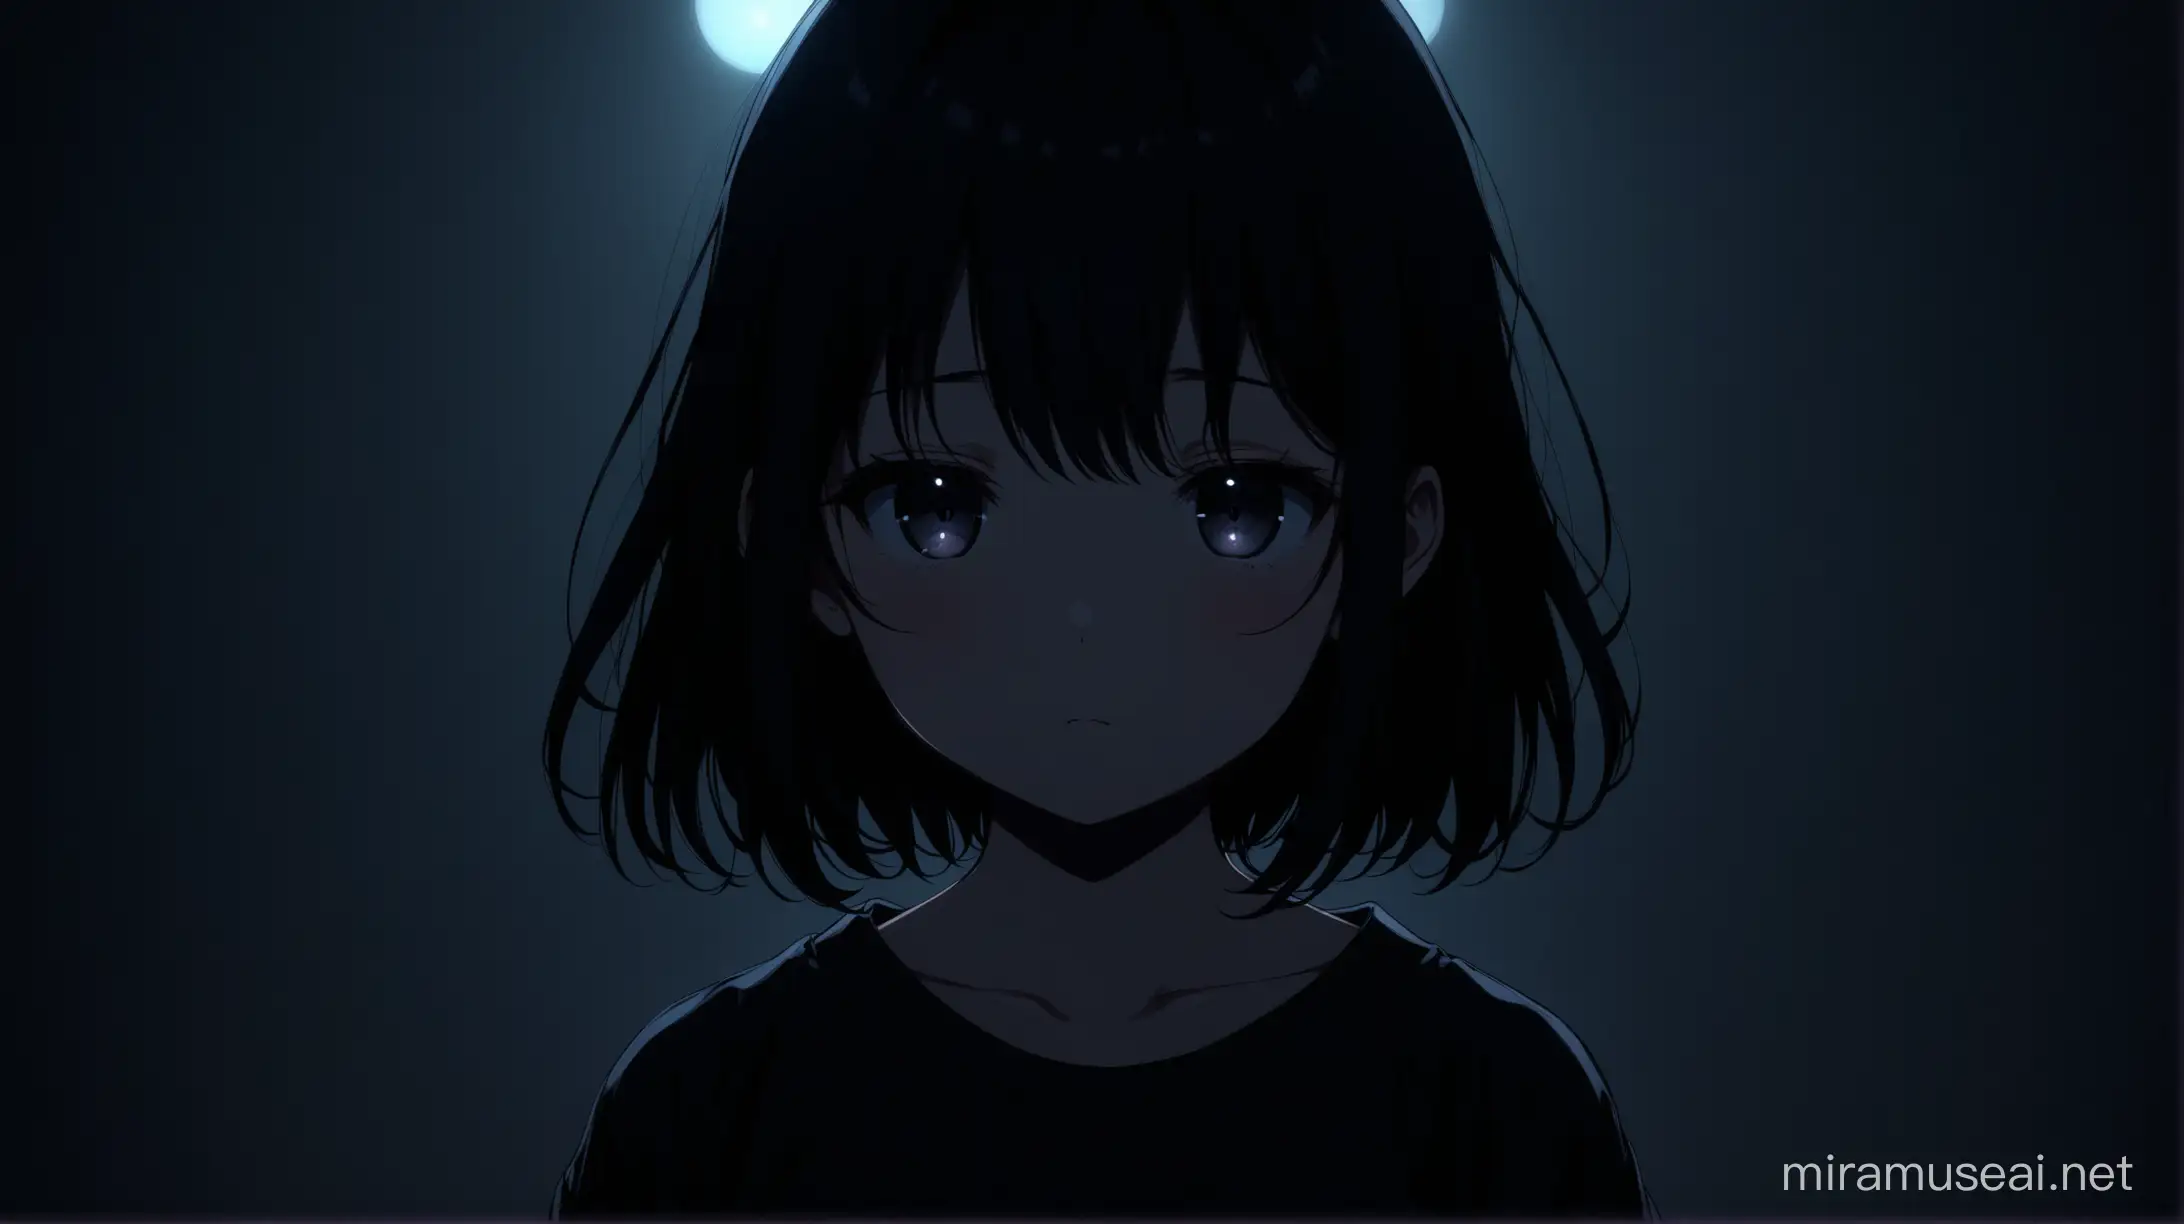 dark, cute anime girl, gloomy lighting, medium range shot